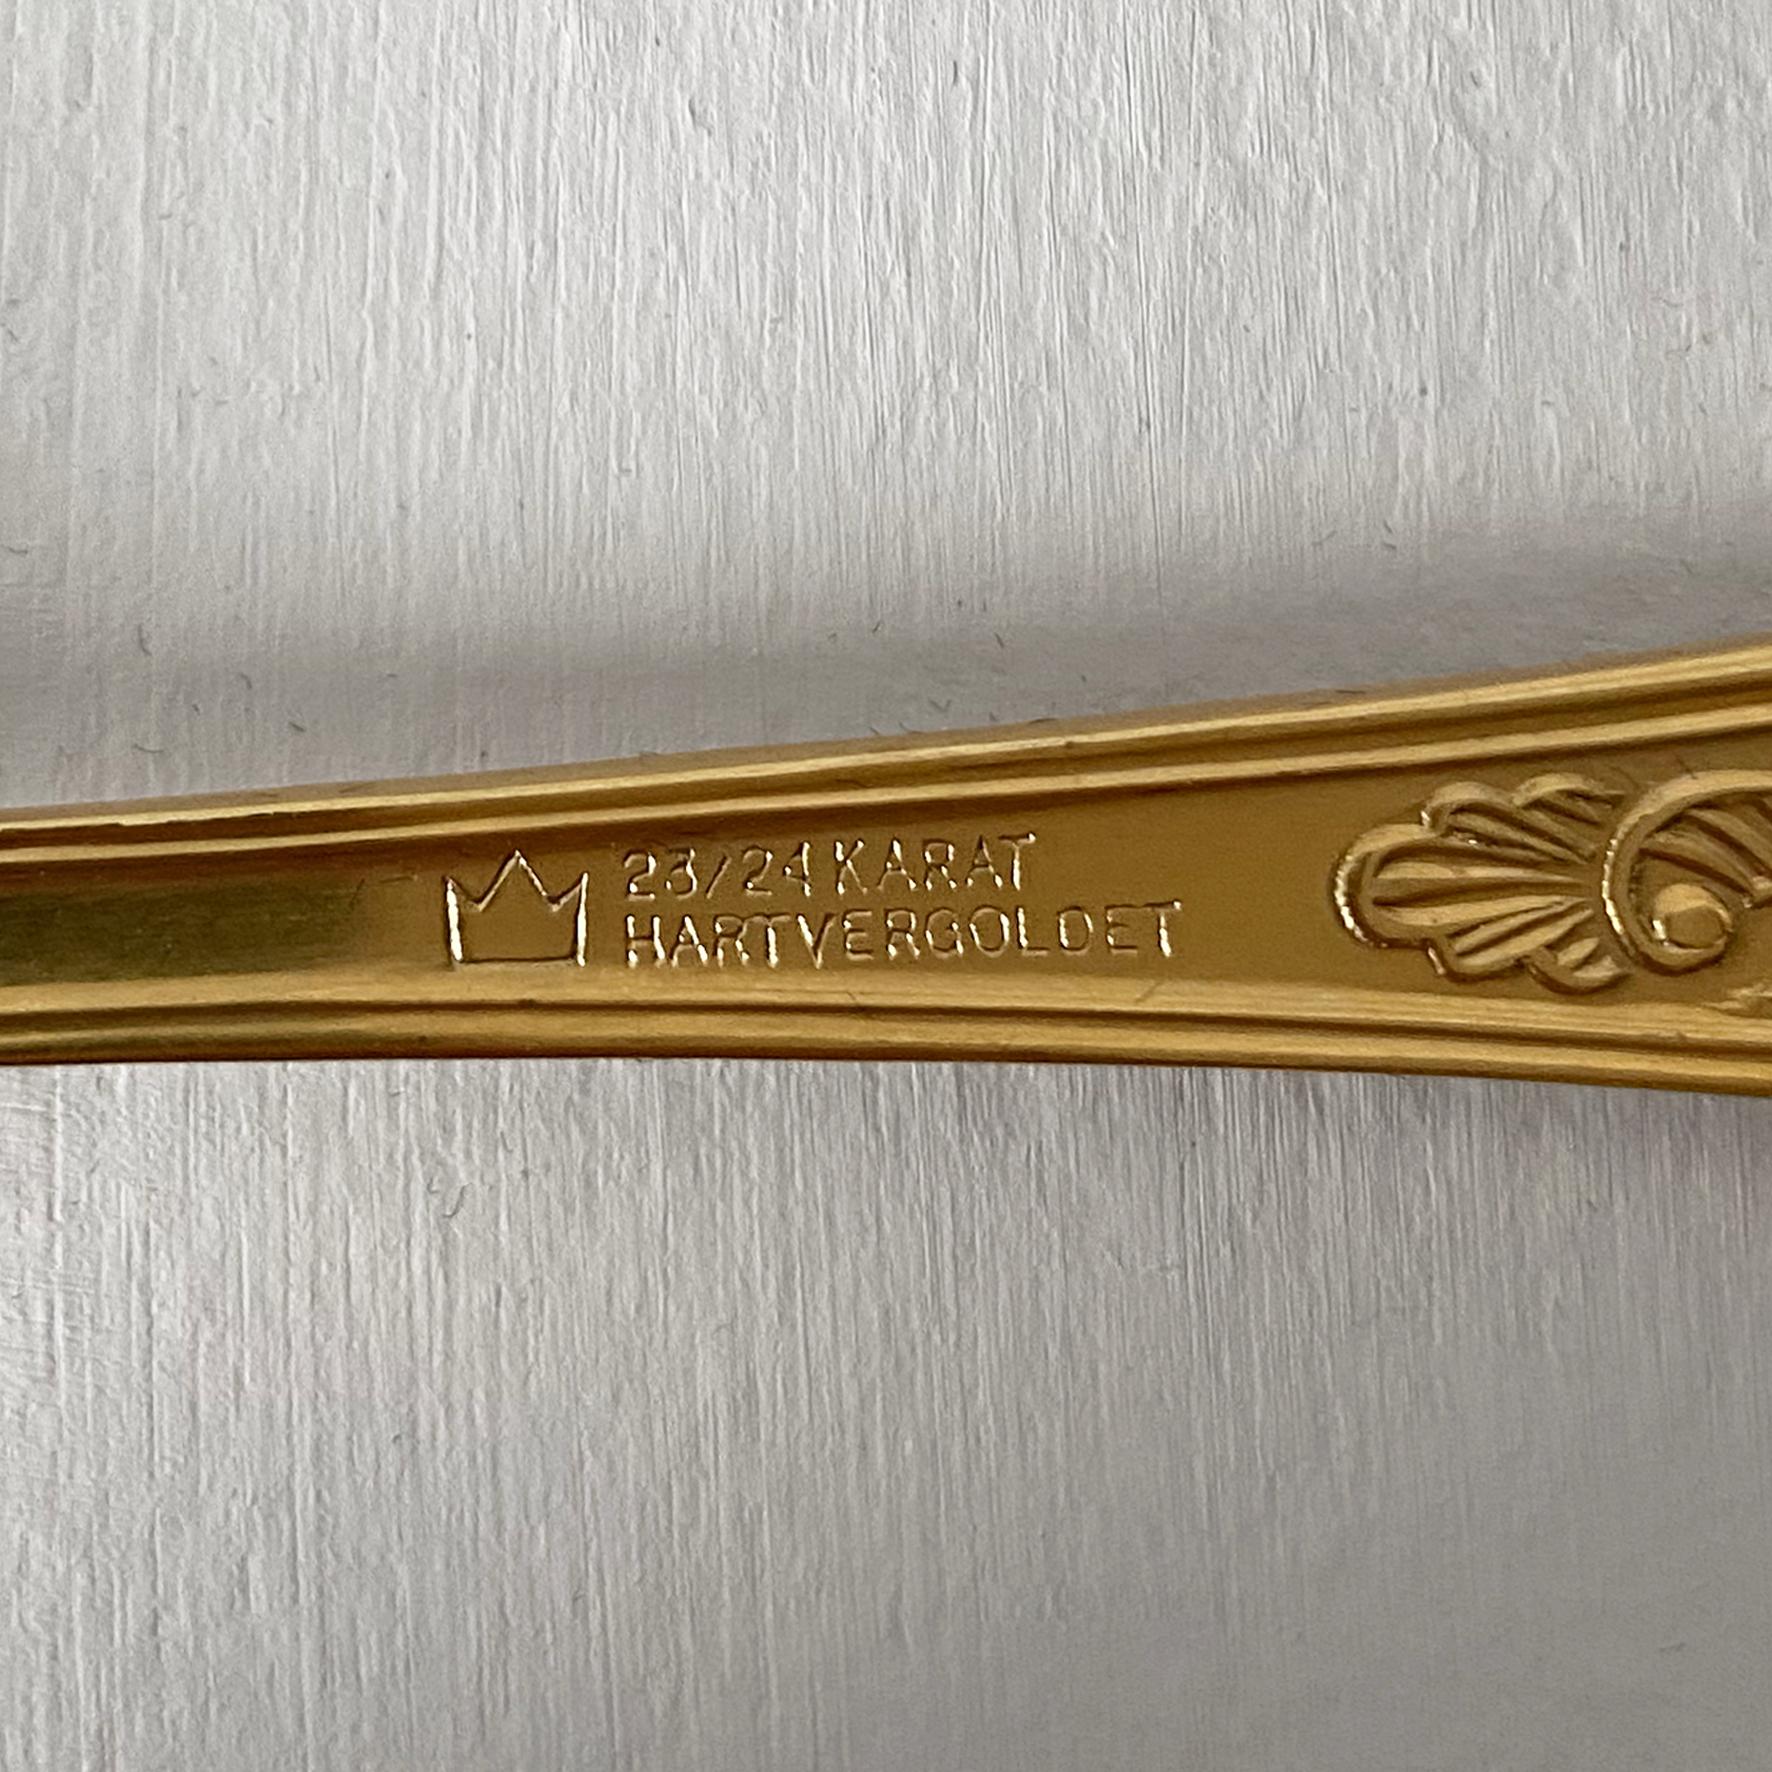 Gold Plate Bestecke Solingen German 23/24 Karat Gold-Plated 70pcs / 12 Person Cutlery Set For Sale